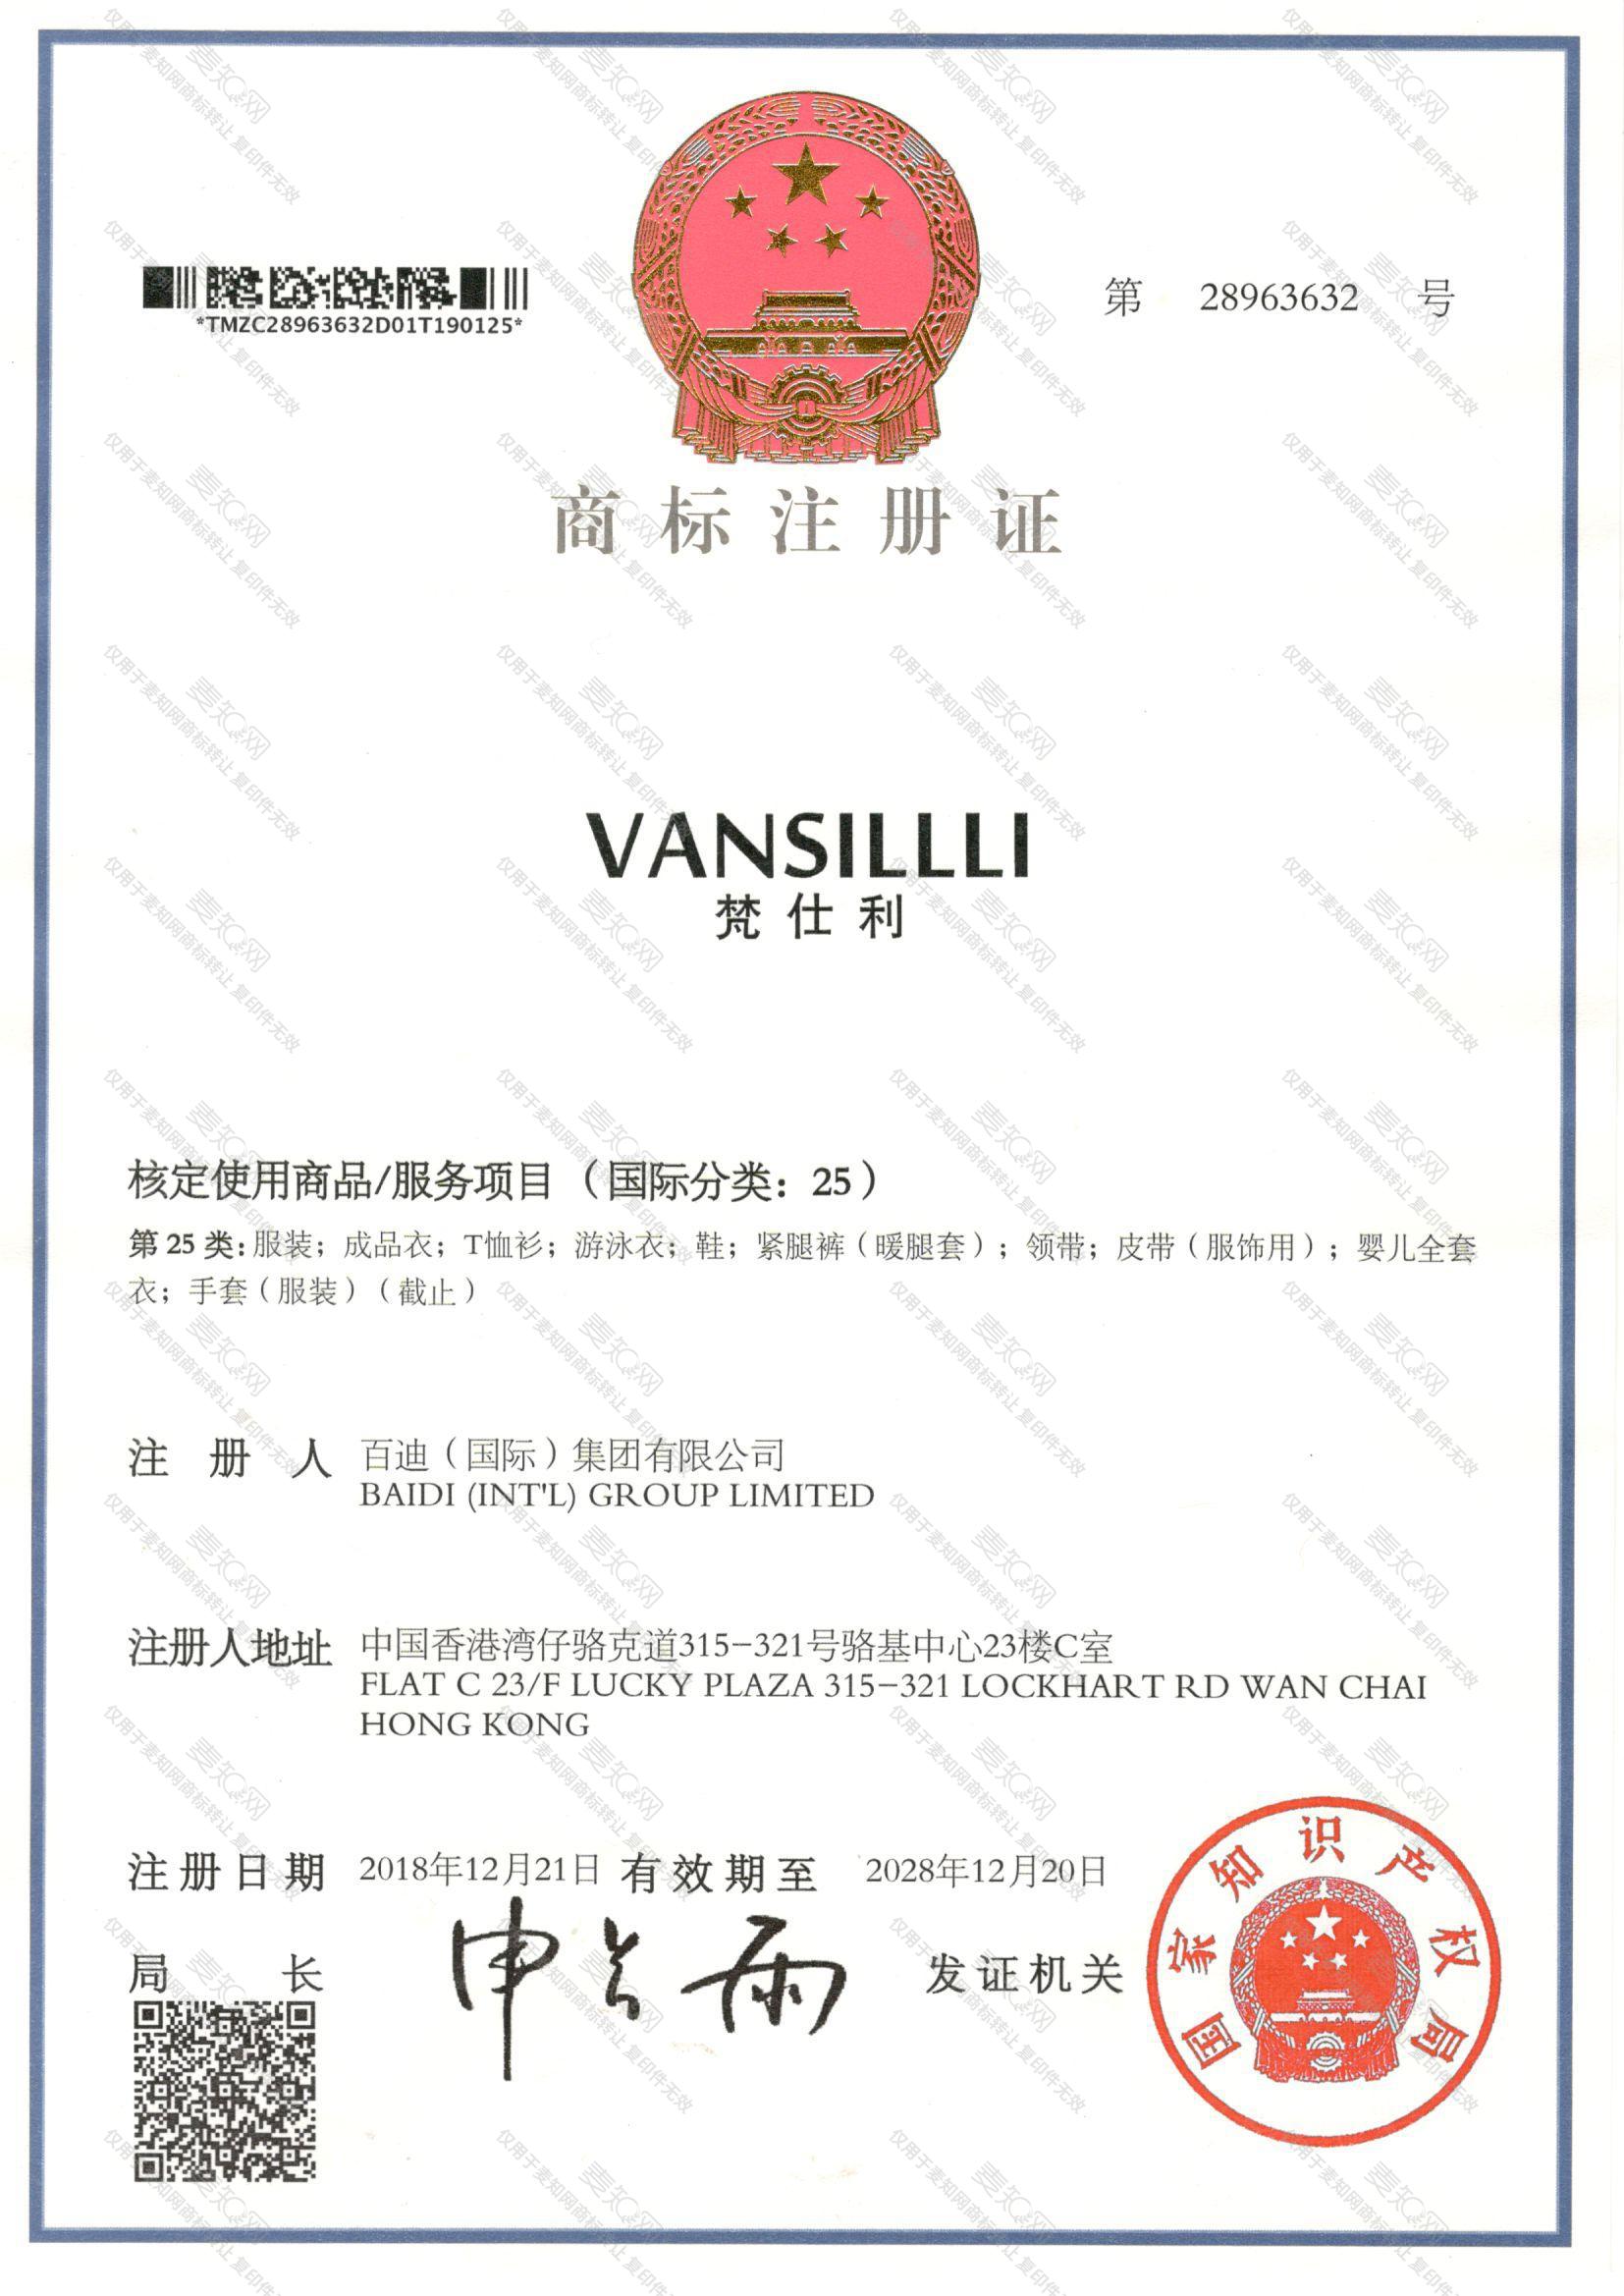 梵仕利 VANSILLLI注册证